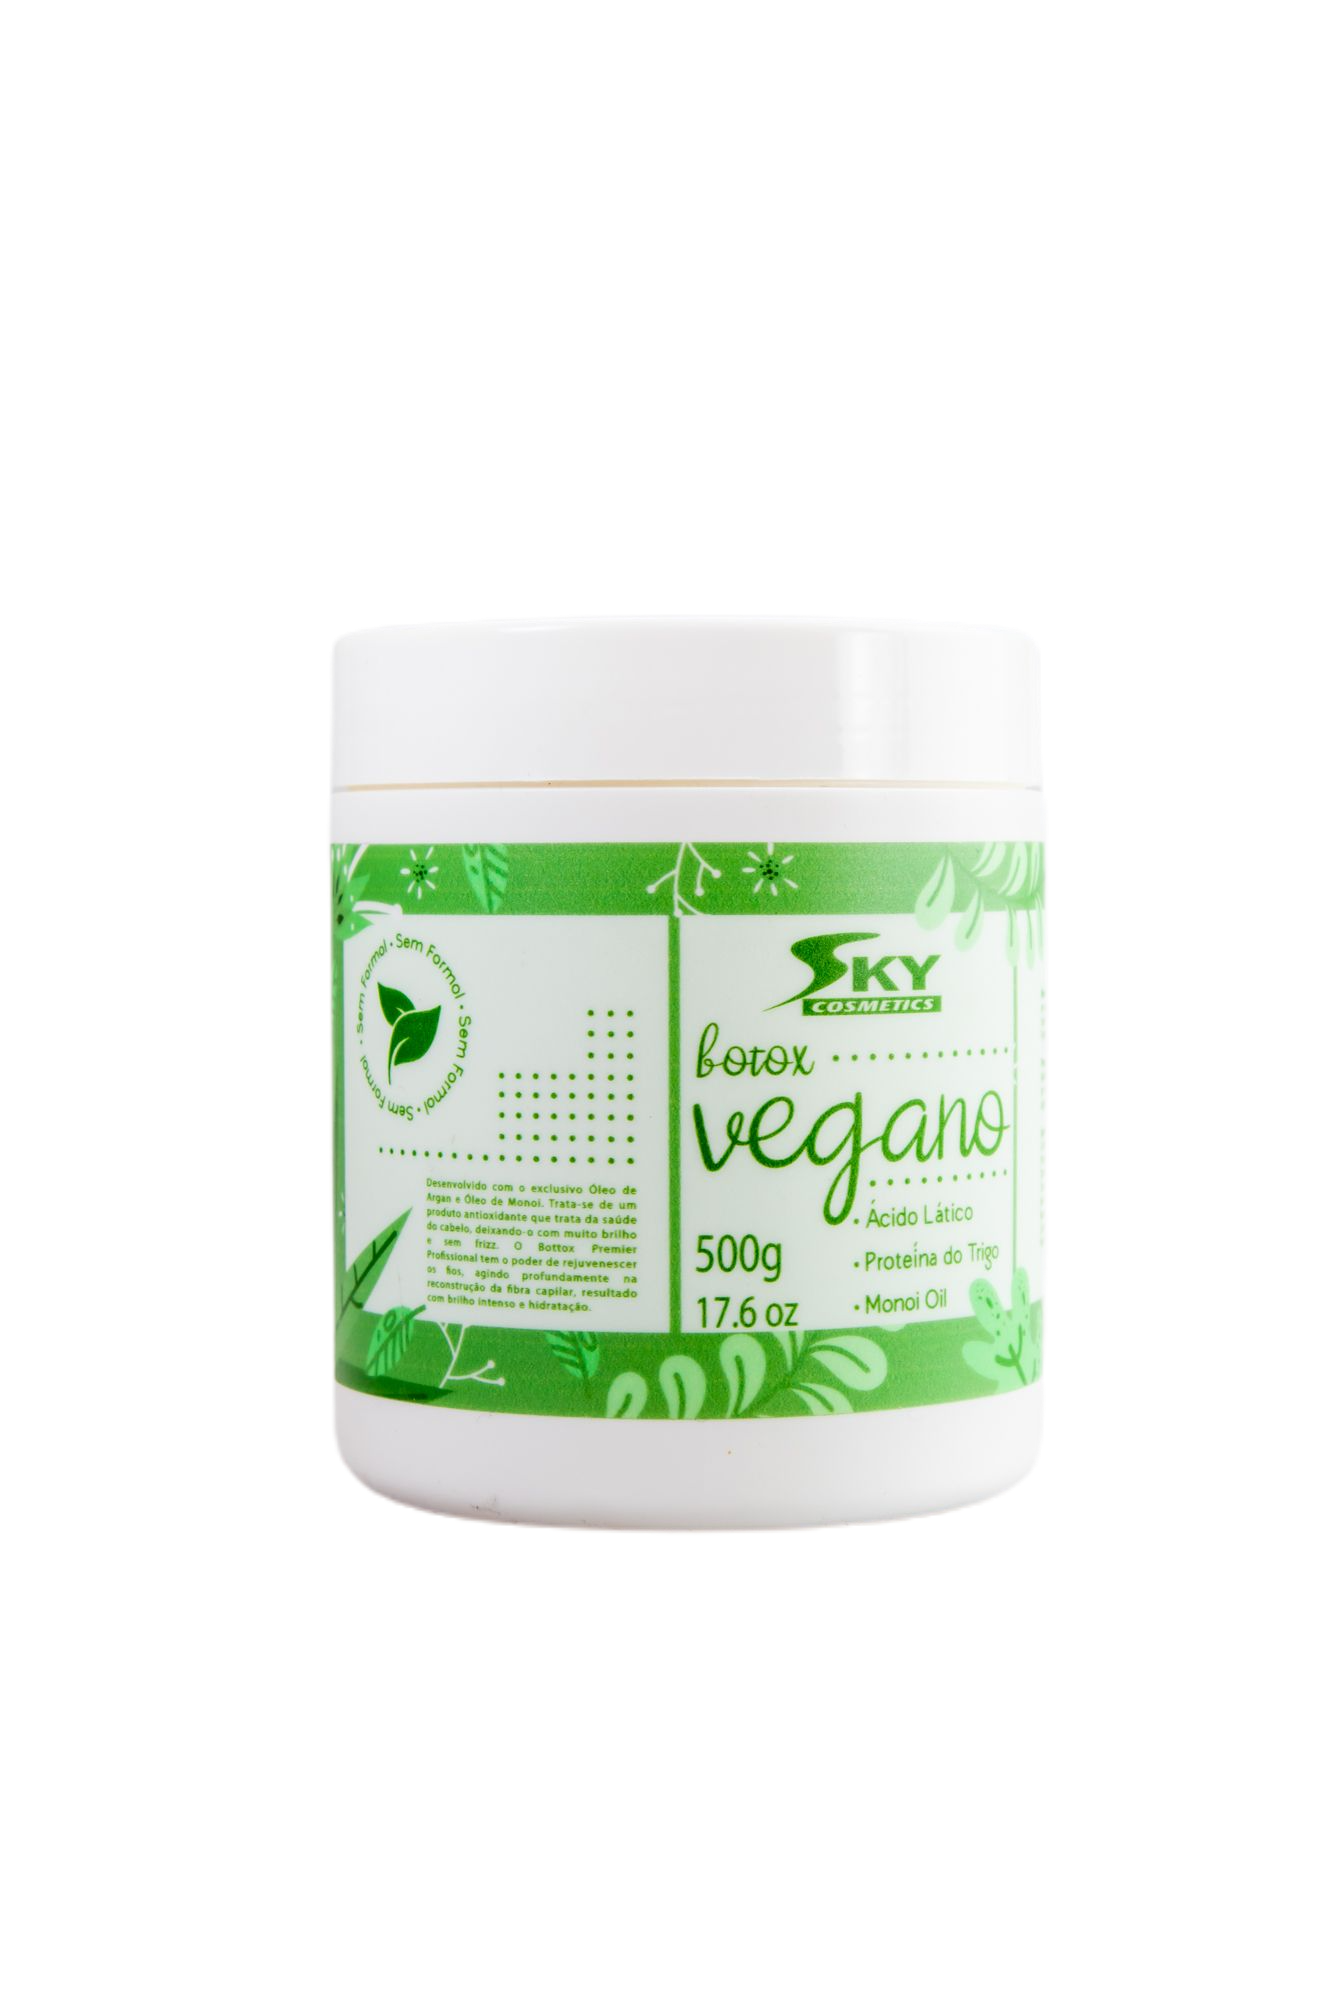 Sky Cosmetics Brazilian Keratin Treatment Vegan Botox Formol Free Strengthening Treatment Cream 500g - Sky Cosmetics